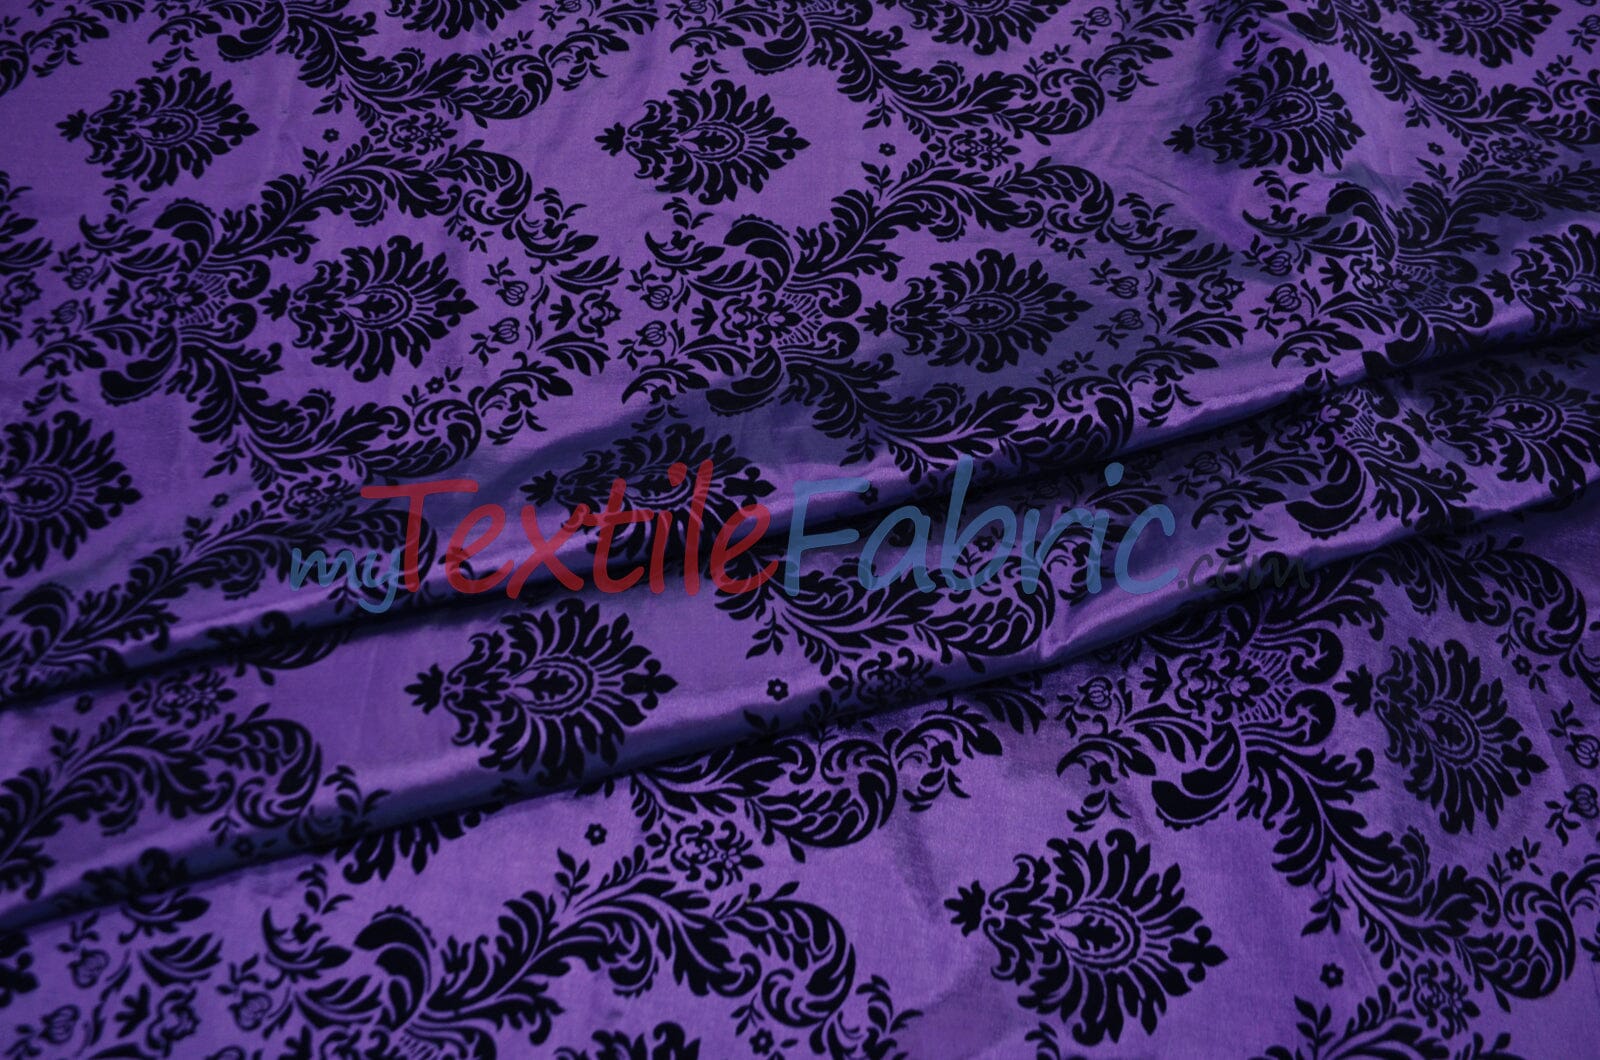 Damask Flocking Taffeta | Flocking Velvet Damask on Taffeta Fabric | 60" Wide | Curtains, Apparel, Cosplay, Costume, Decor | Fabric mytextilefabric Yards Purple Damask 